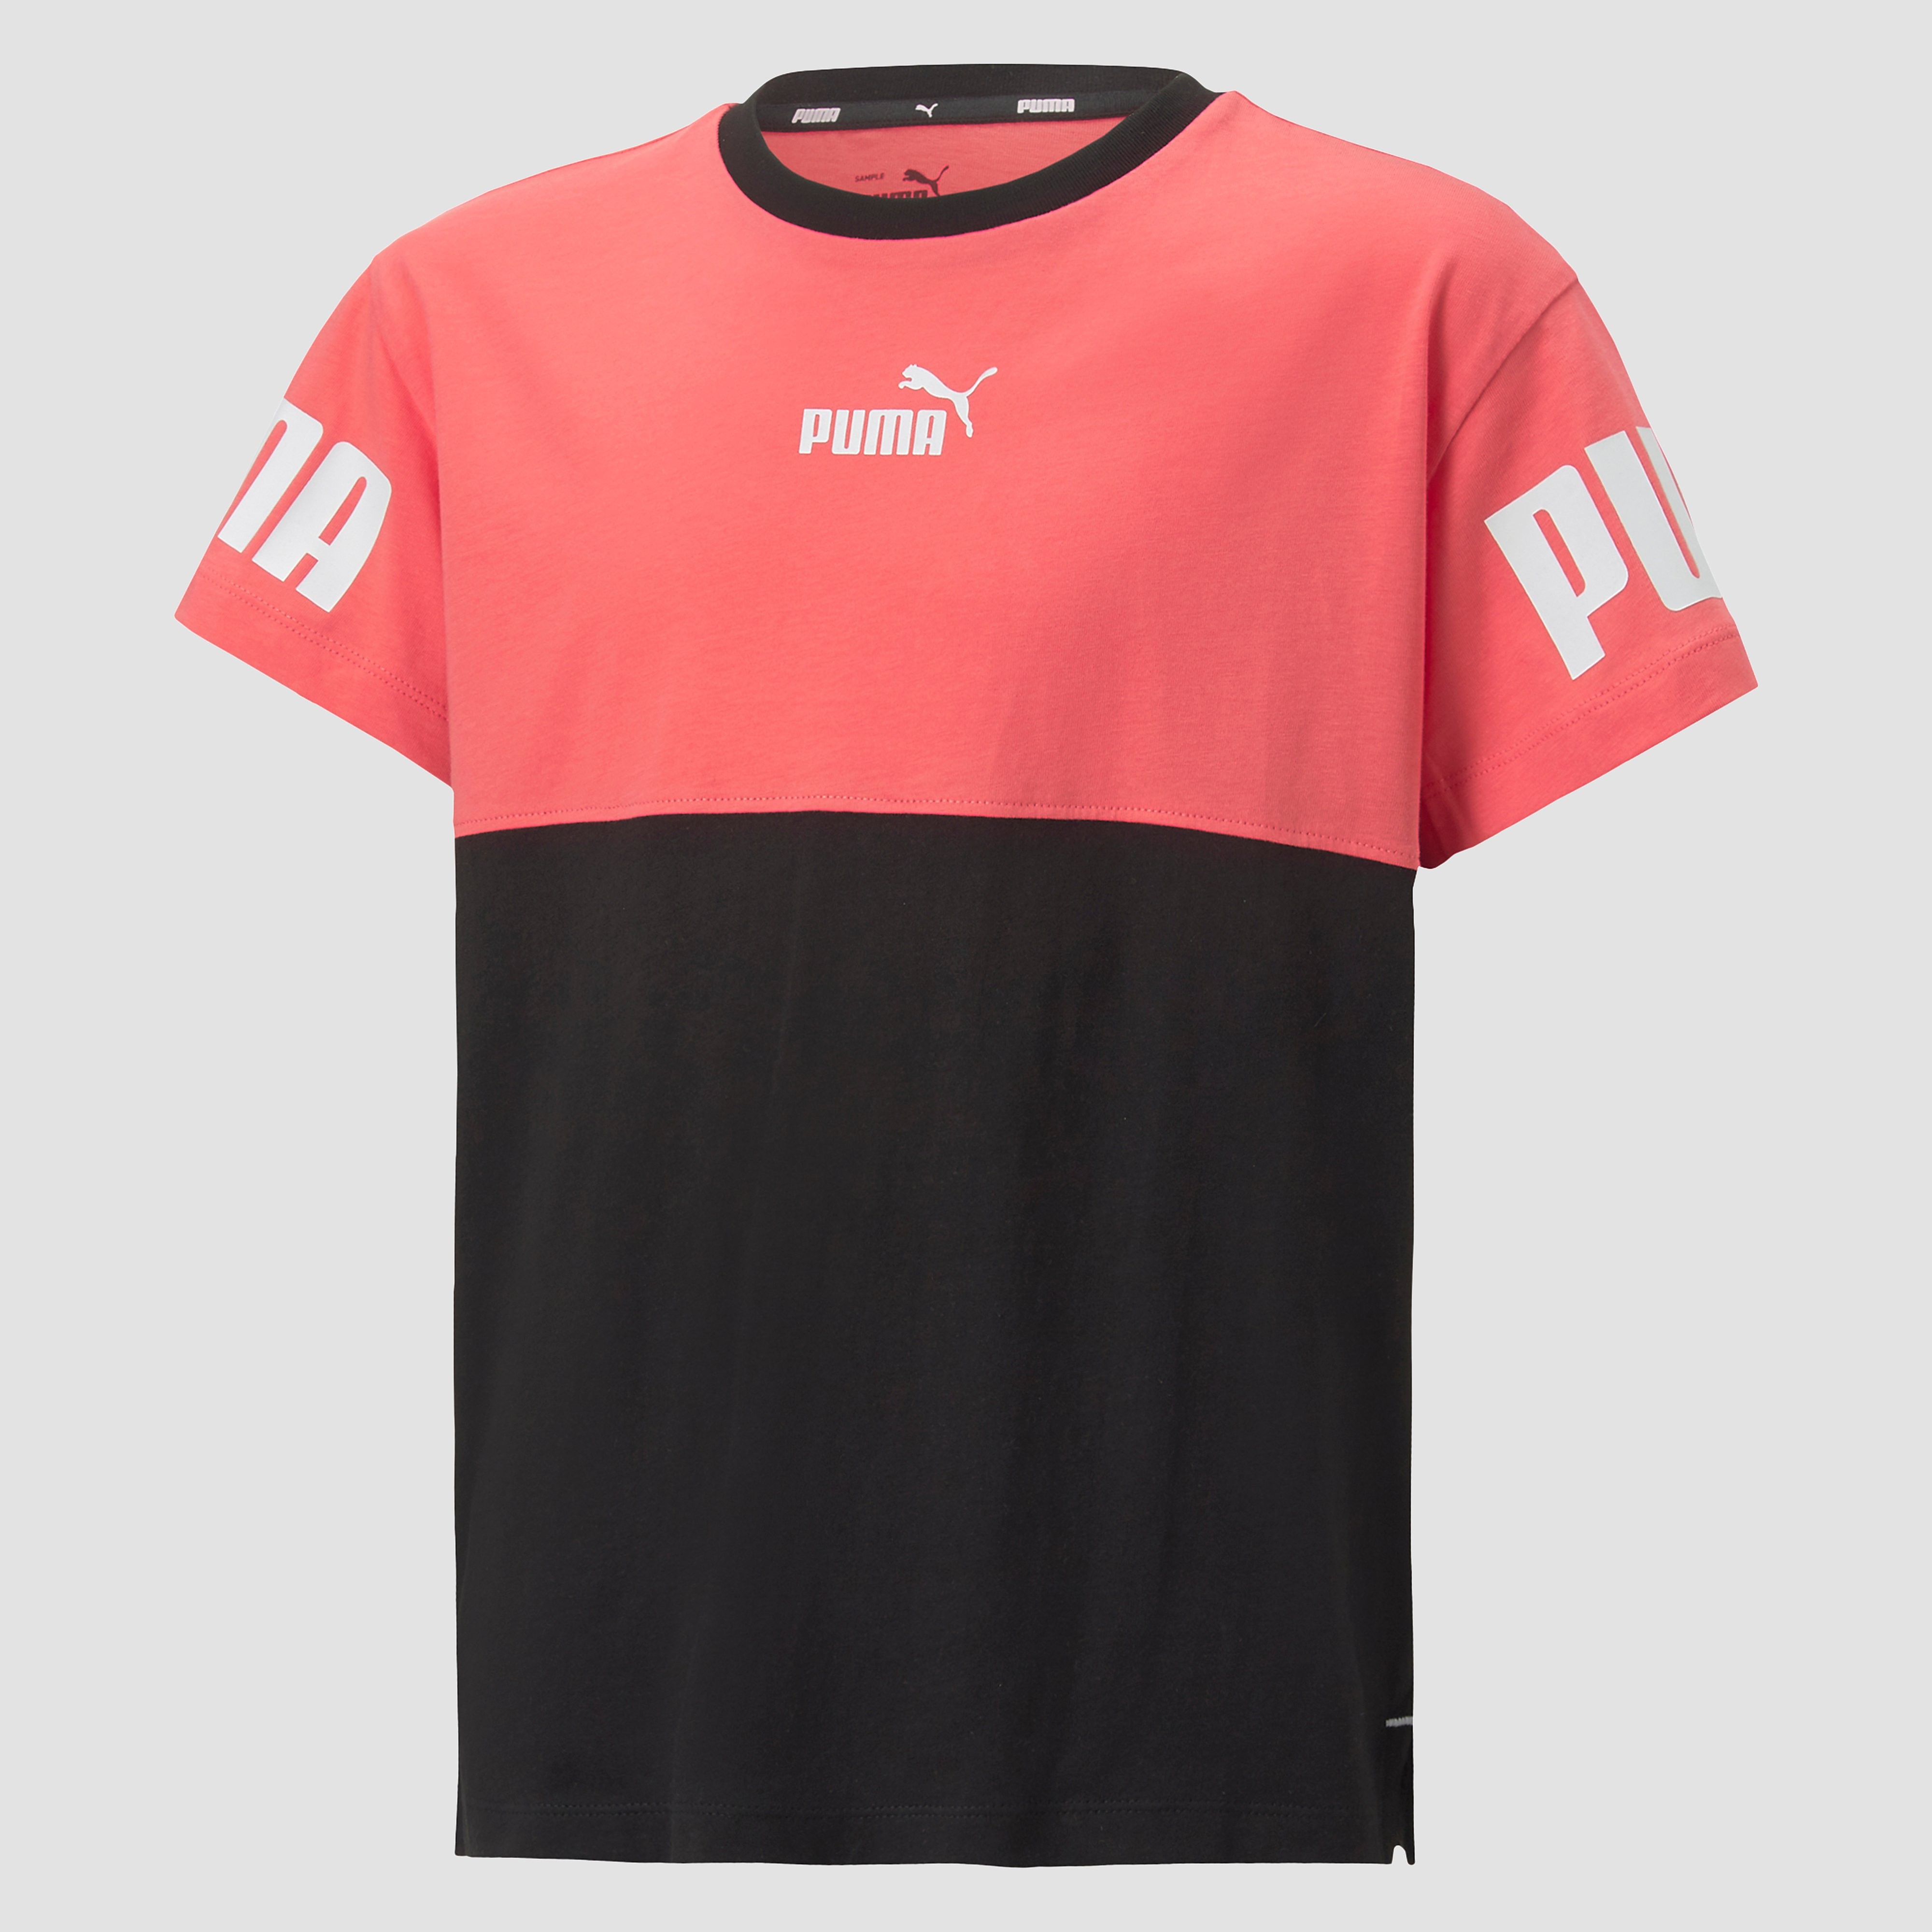 Puma Puma power colorblock shirt roze/zwart kinderen kinderen